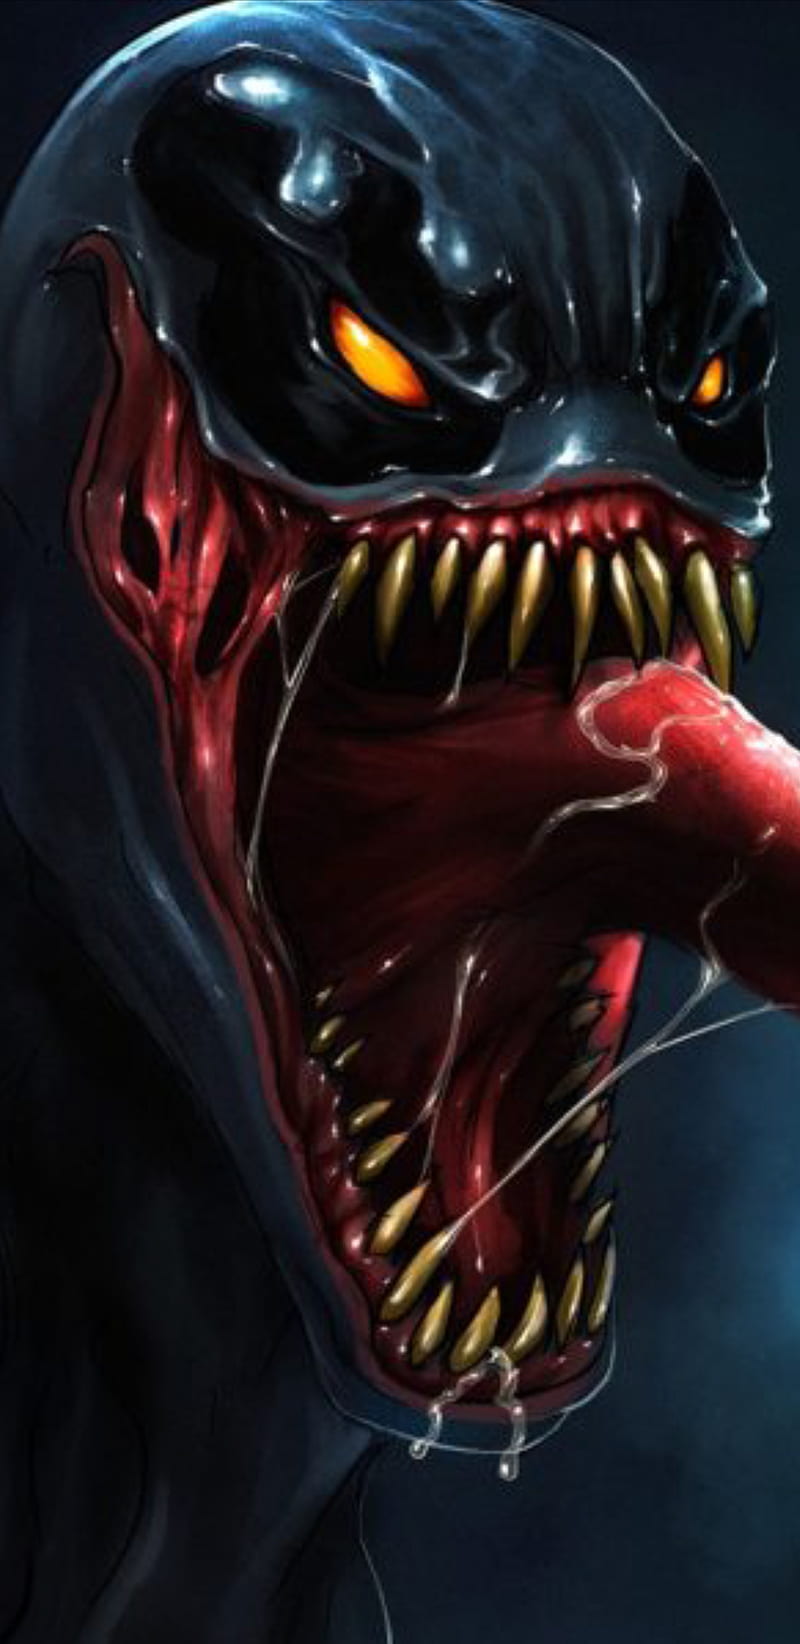 1080p Free Download Venom Angry Black Eyes Hero Marvel Movie